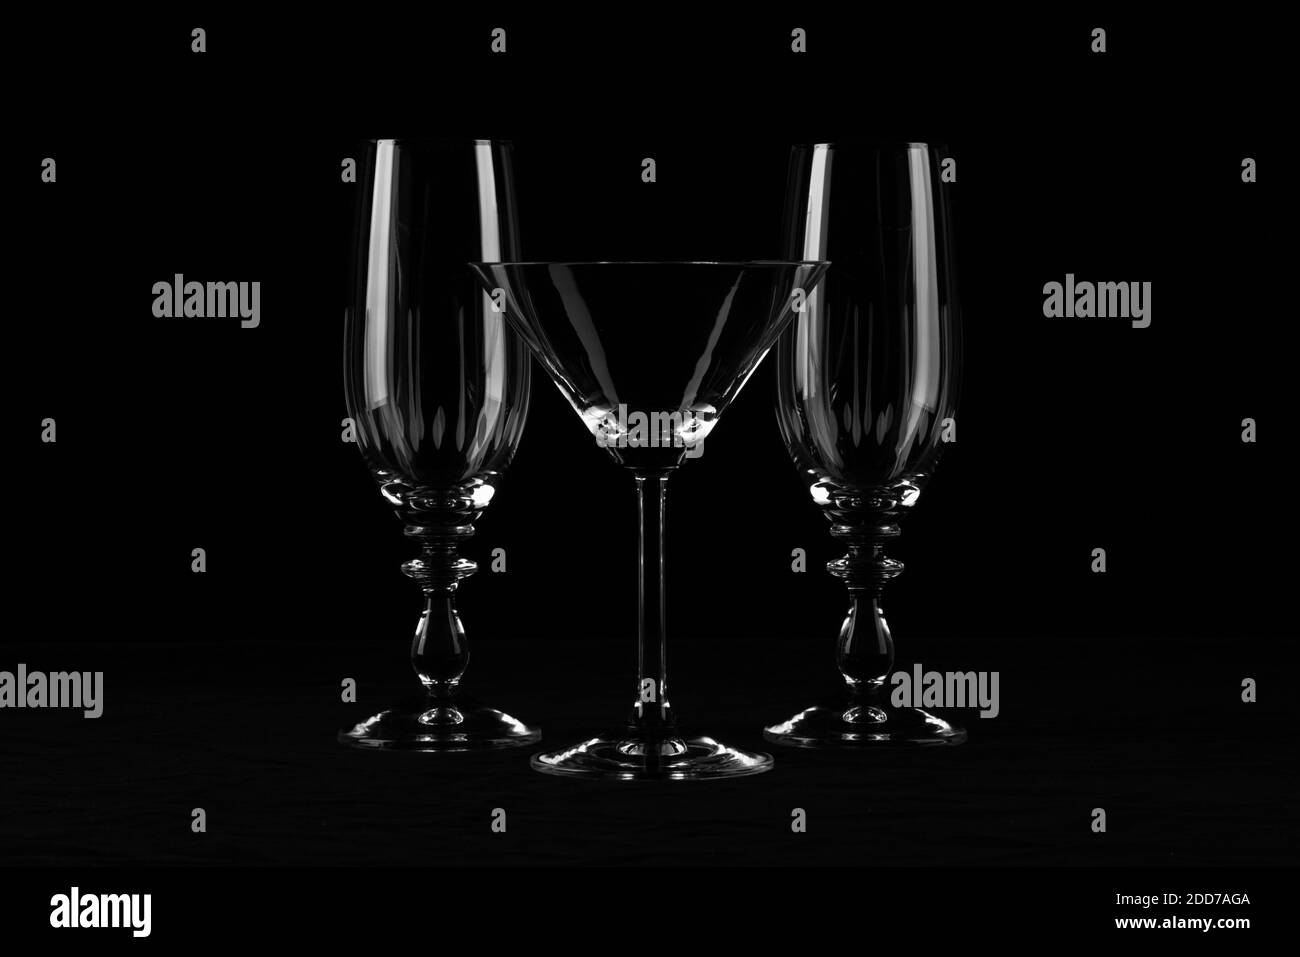 B&W Low-Key Fine Art with 3 glasses against a black velvet backdrop Stock Photo